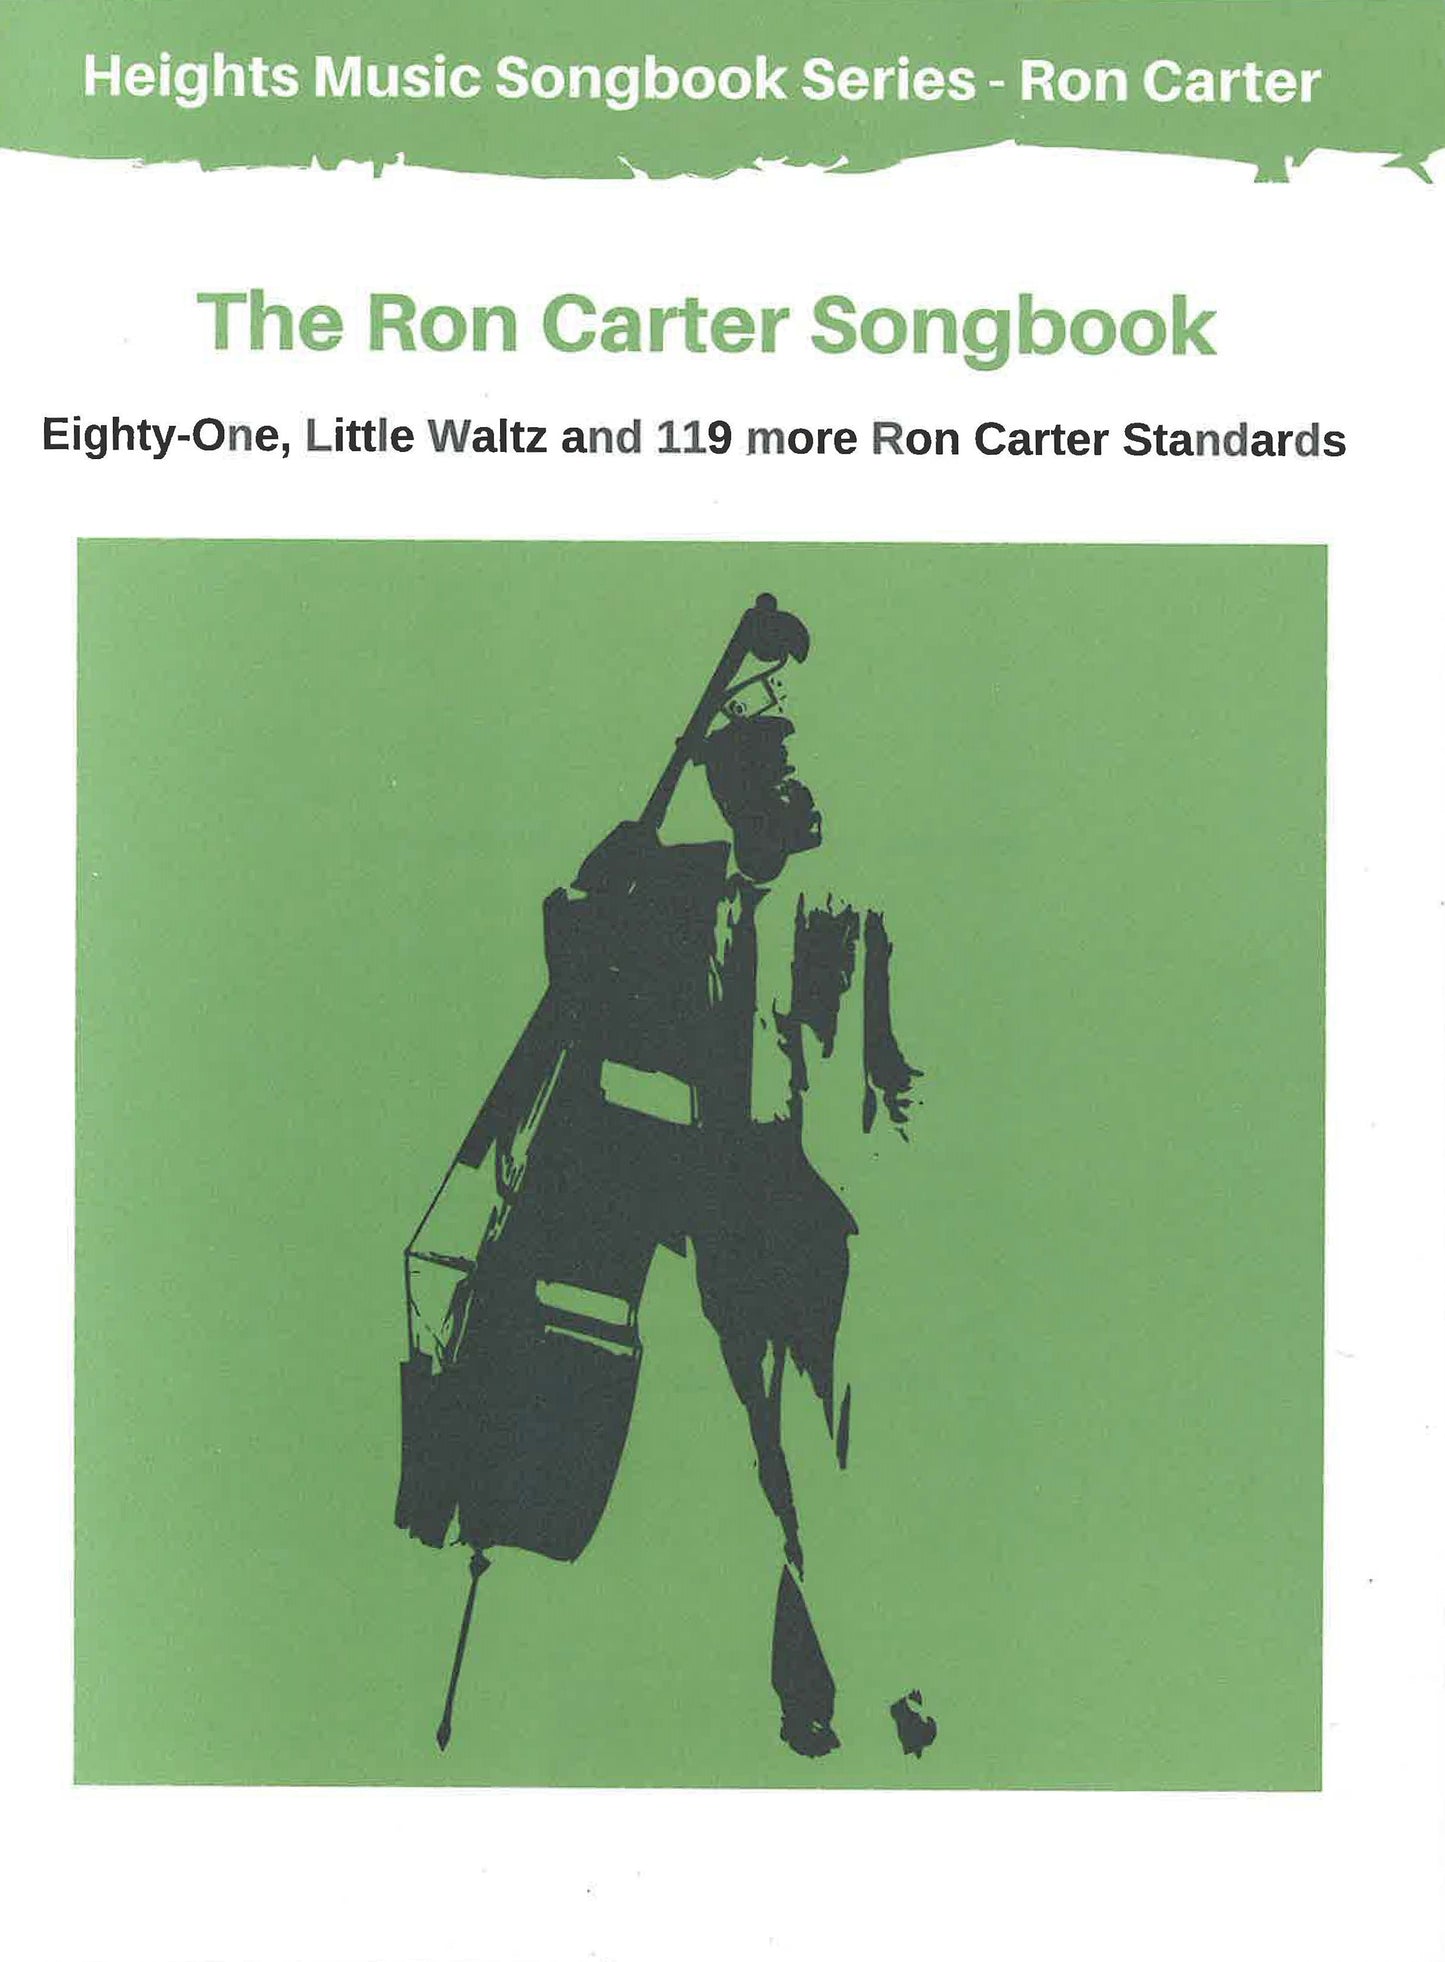 Carter: The Ron Carter Songbook